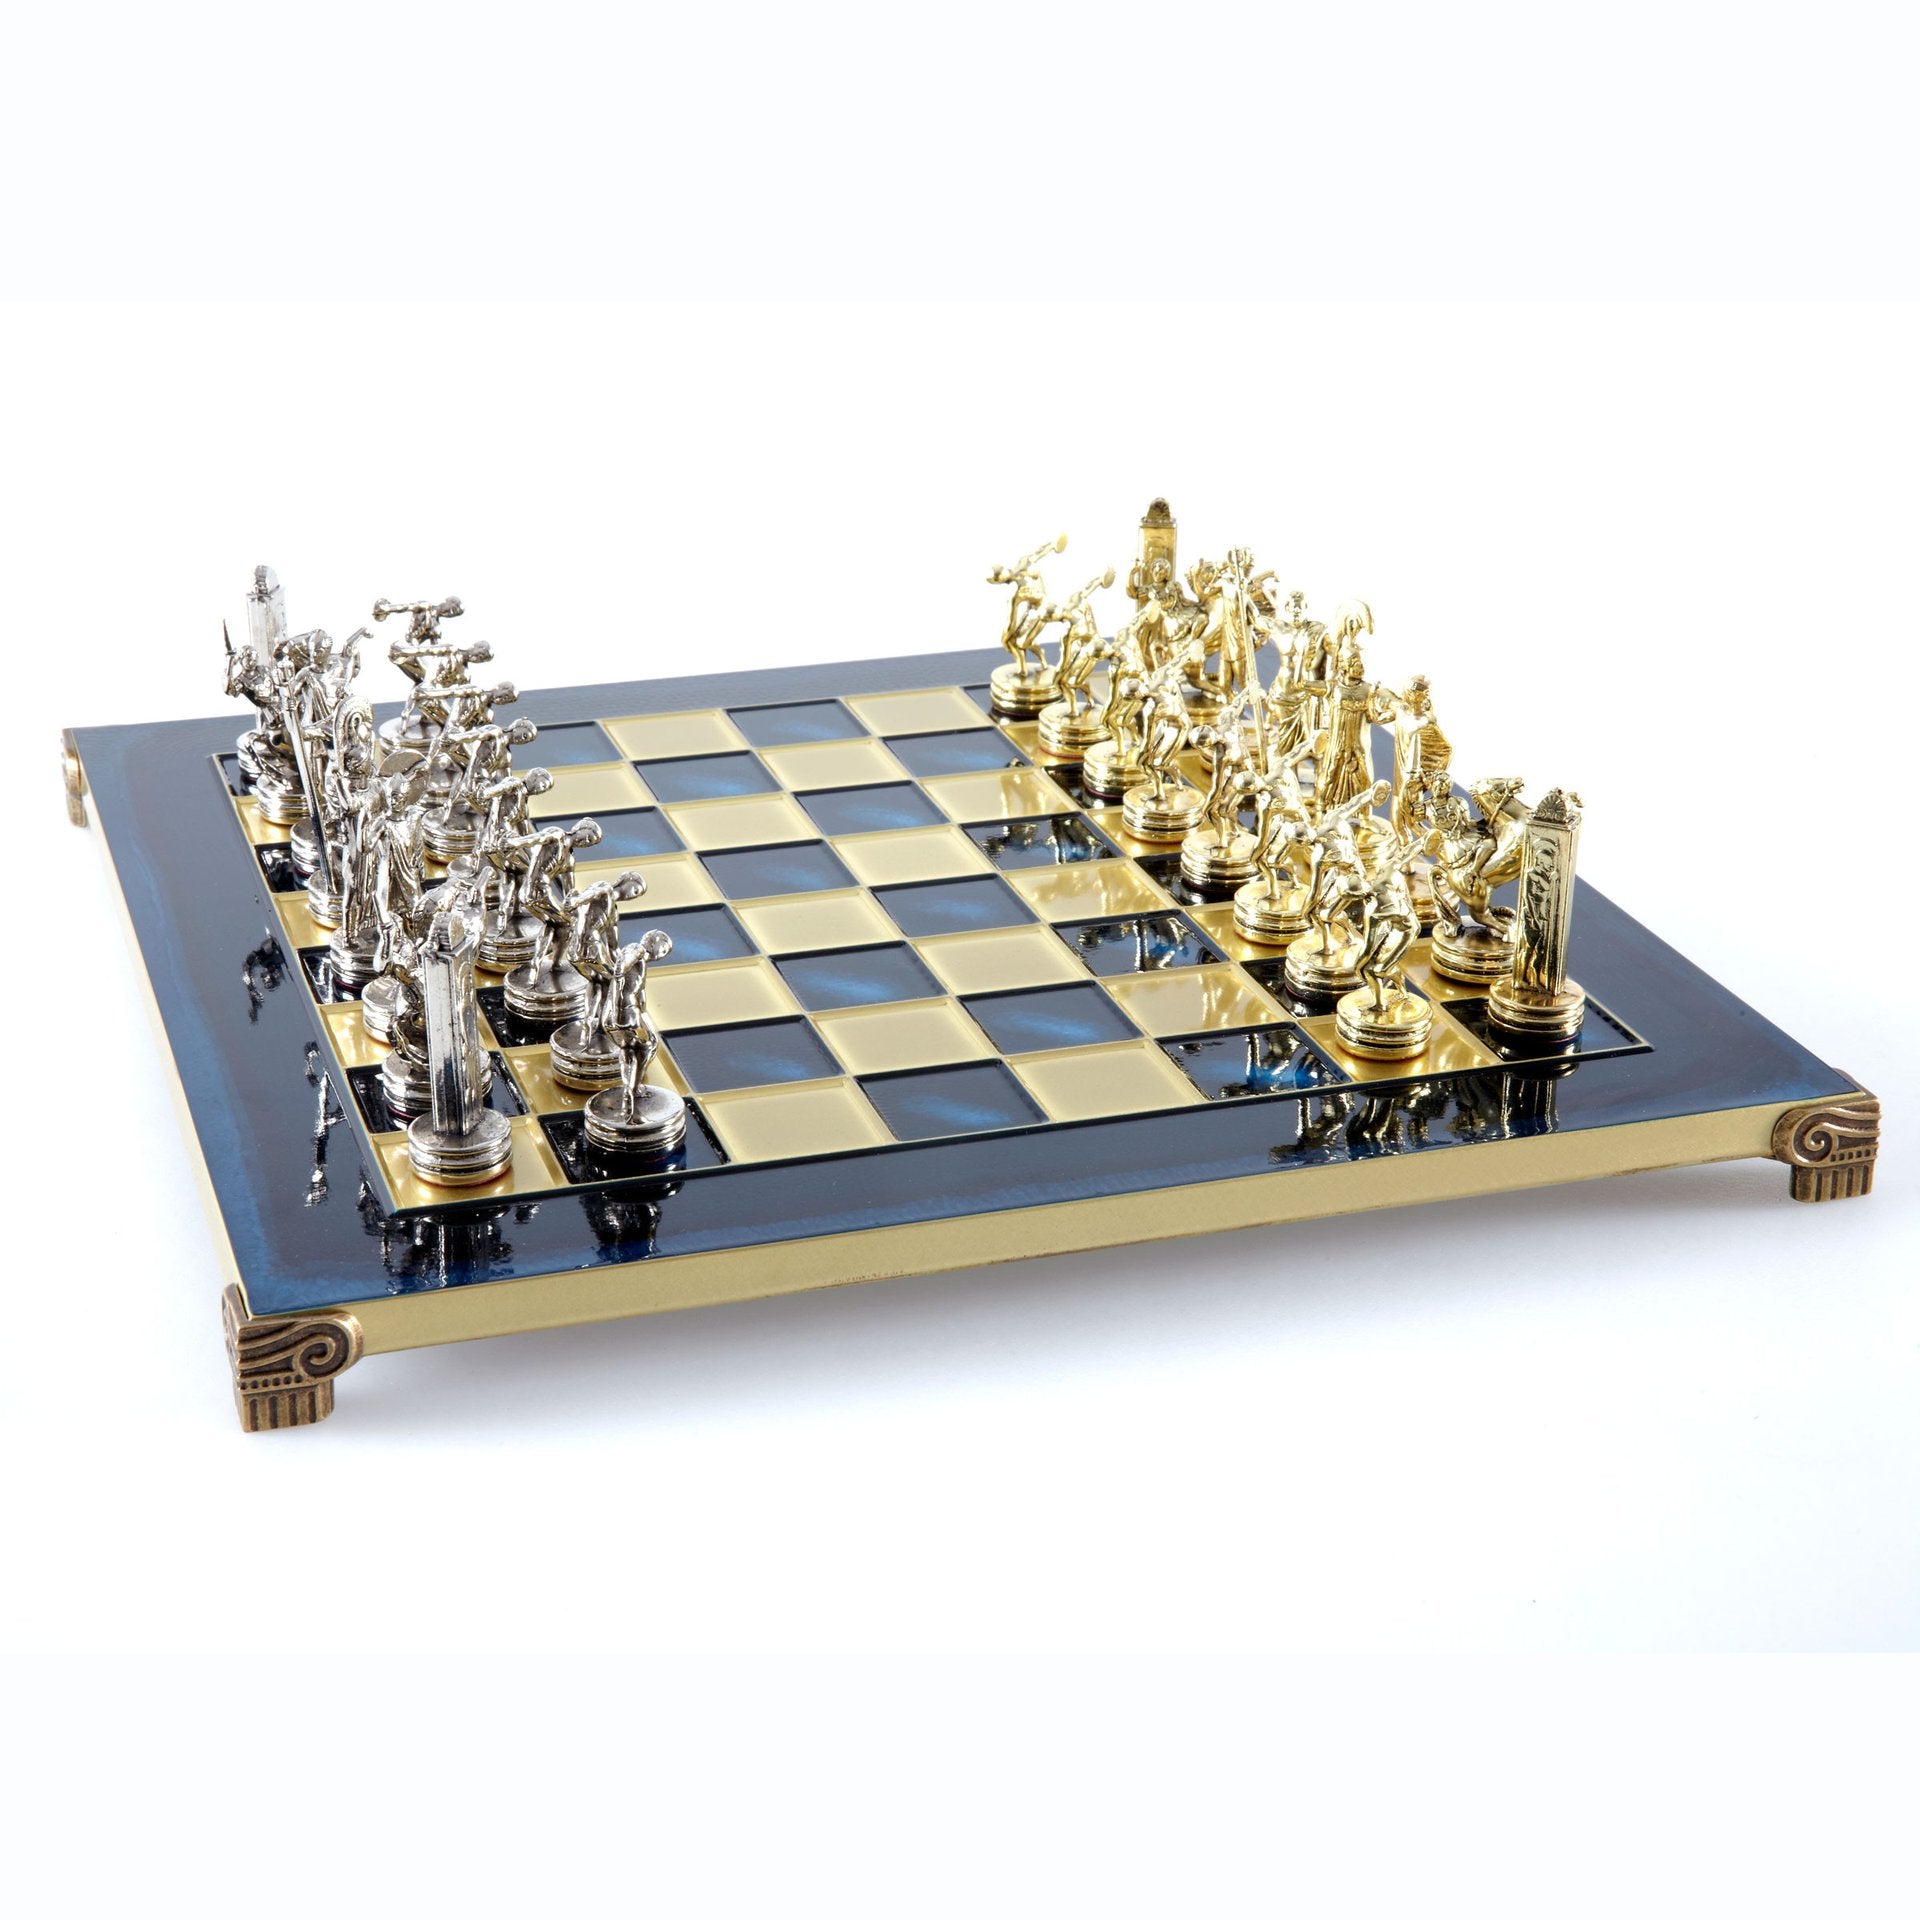 Ruy Lopez: Morphy Defense, Mackenzie Variation - Rapid - Titled Chess 